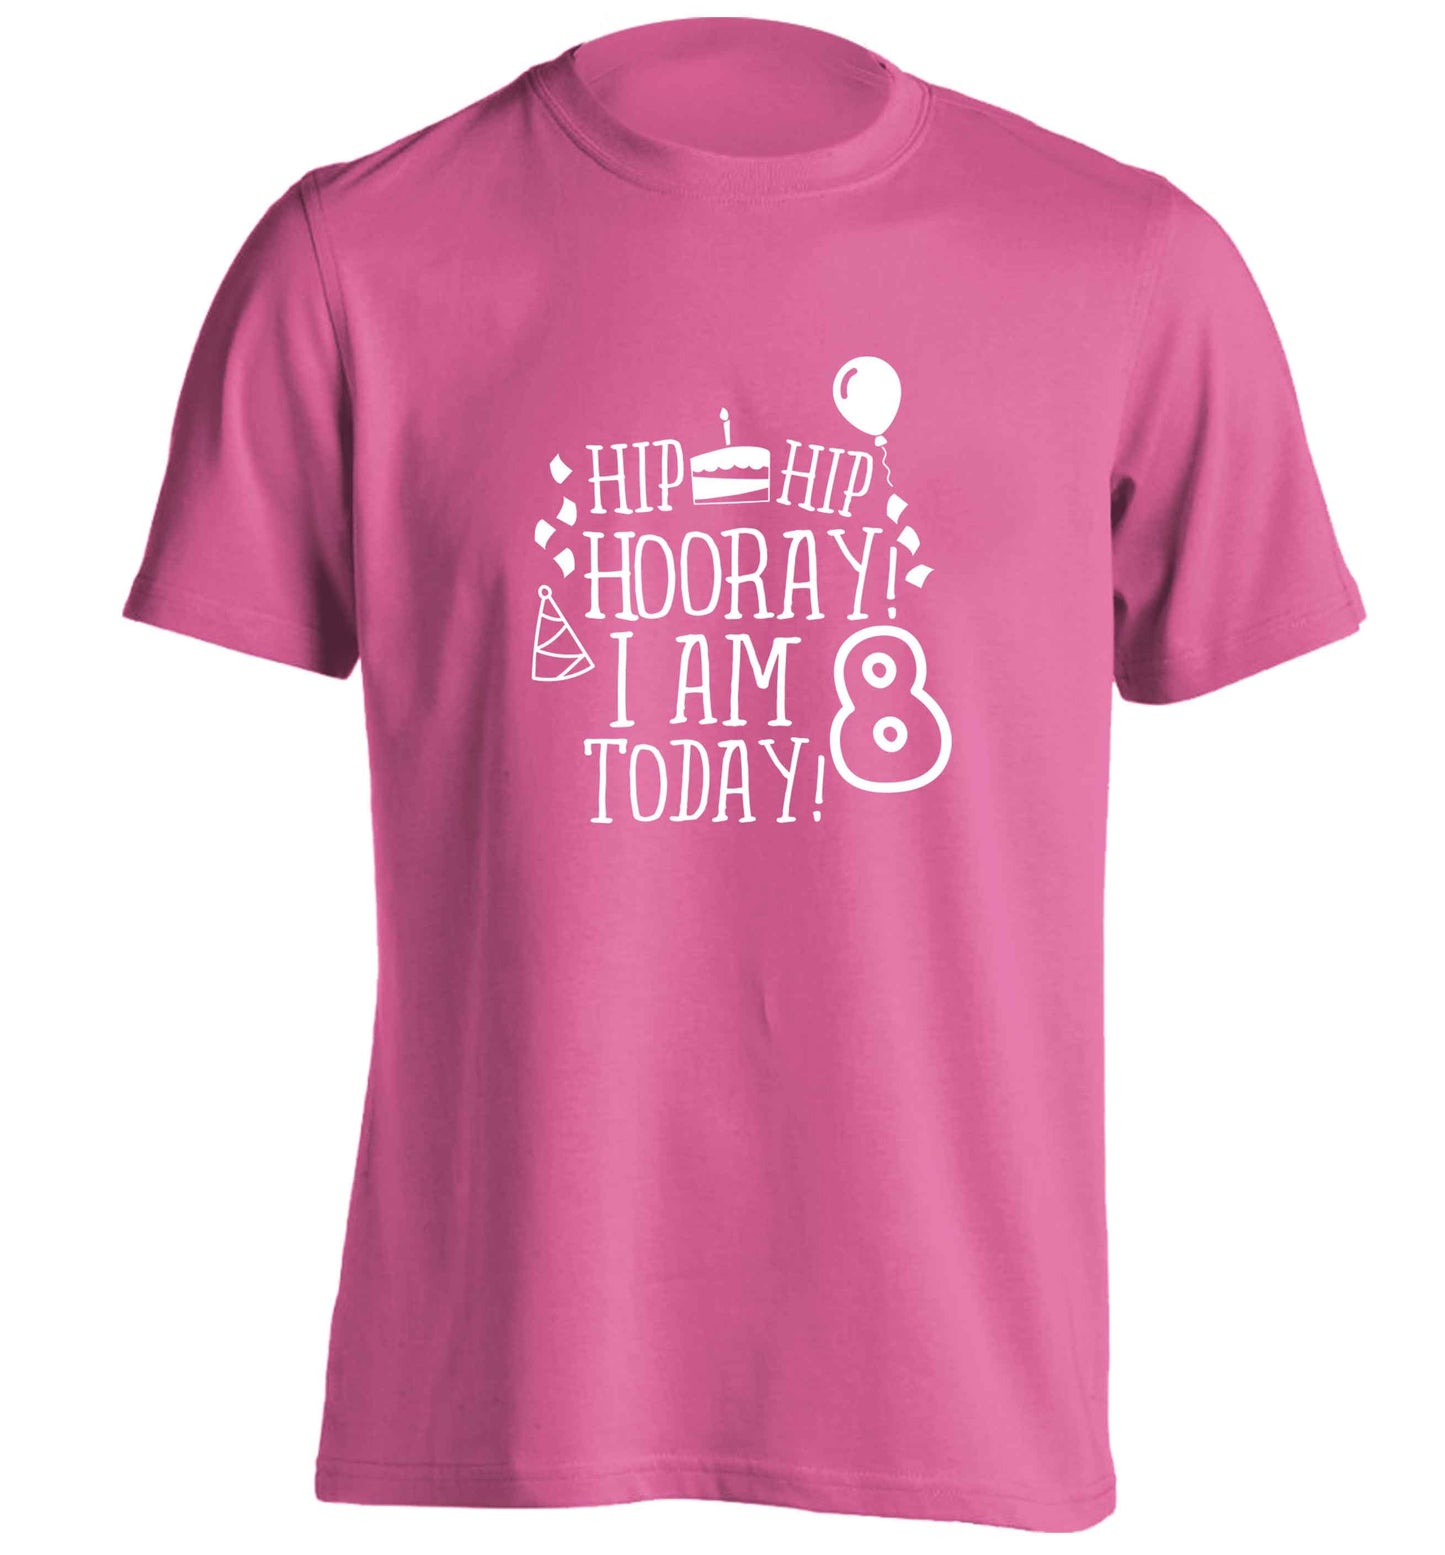 Hip hip hooray I am 8 today! adults unisex pink Tshirt 2XL